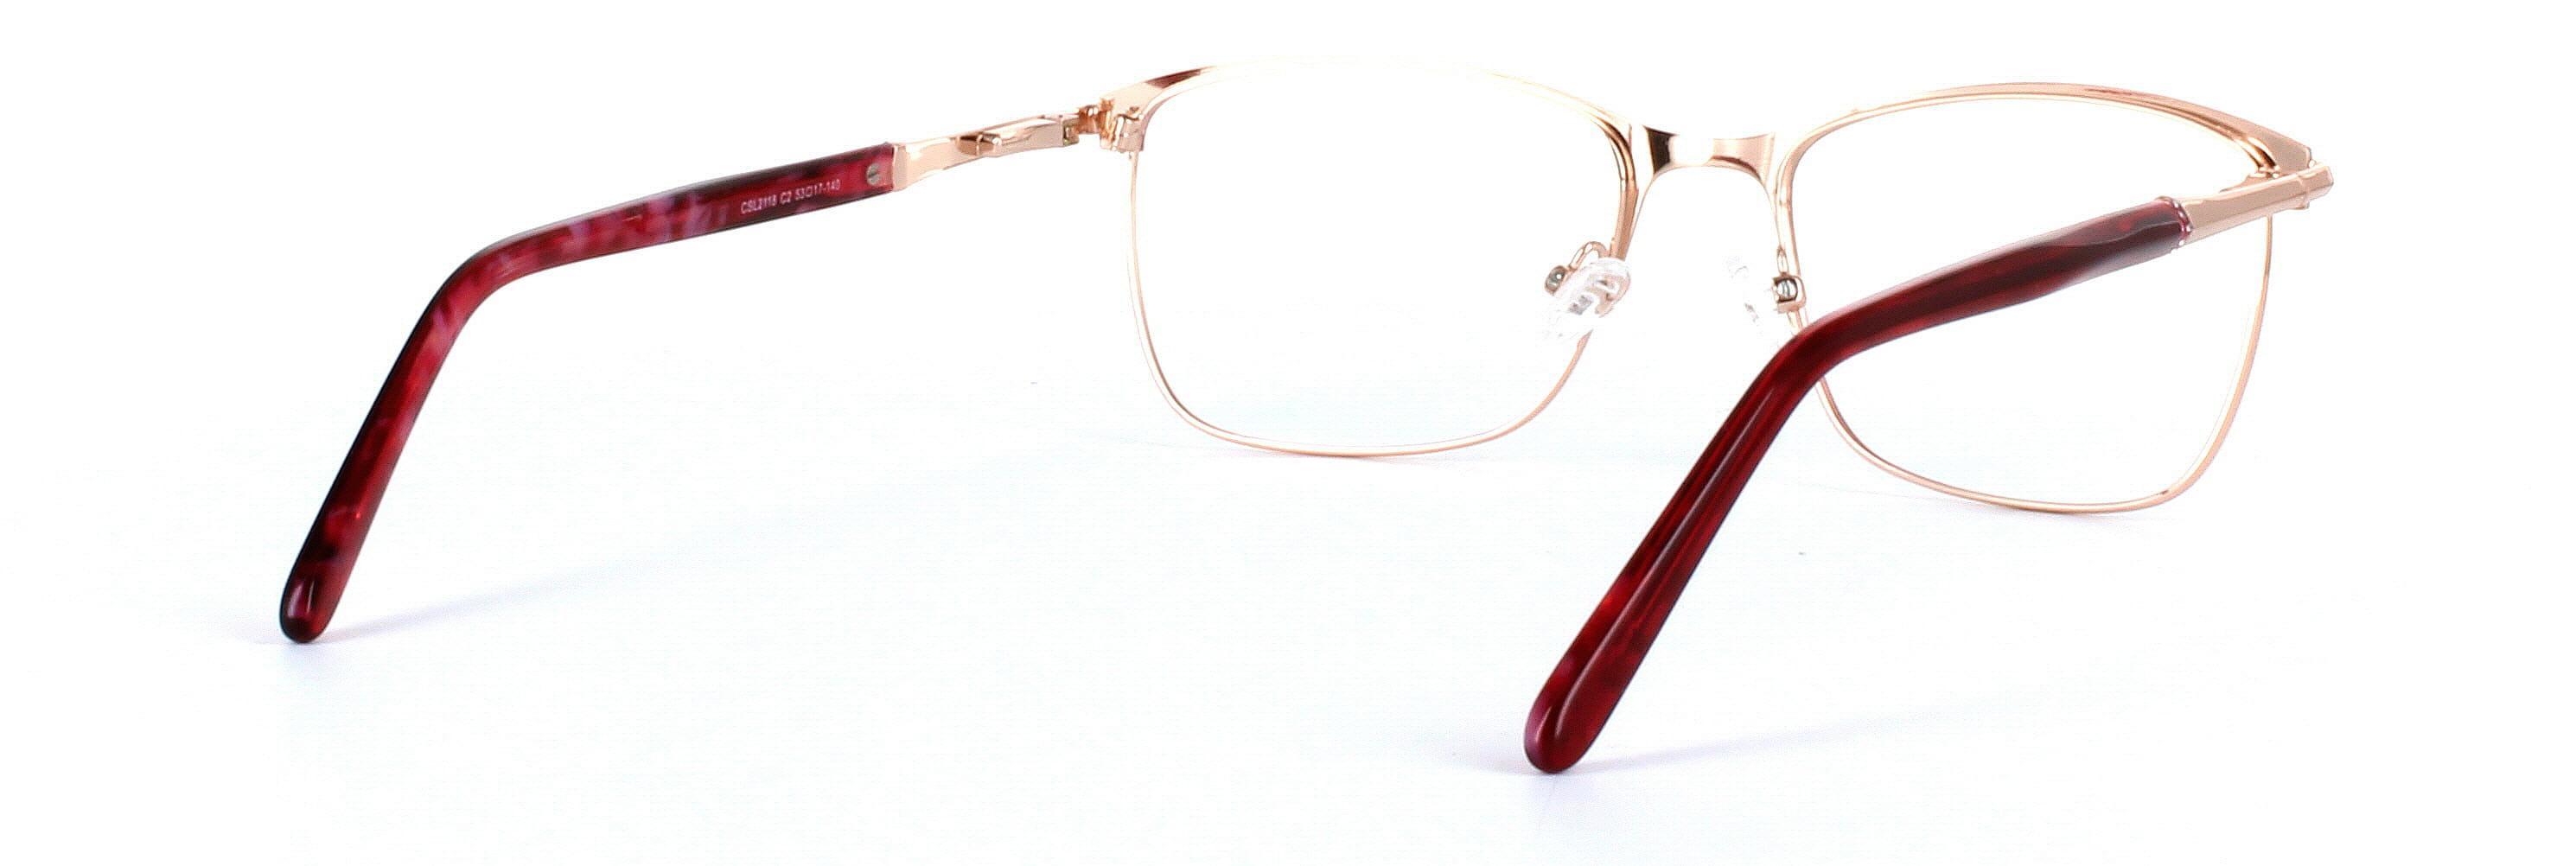 Pheobie Burgundy Full Rim Oval Metal Glasses - Image View 4